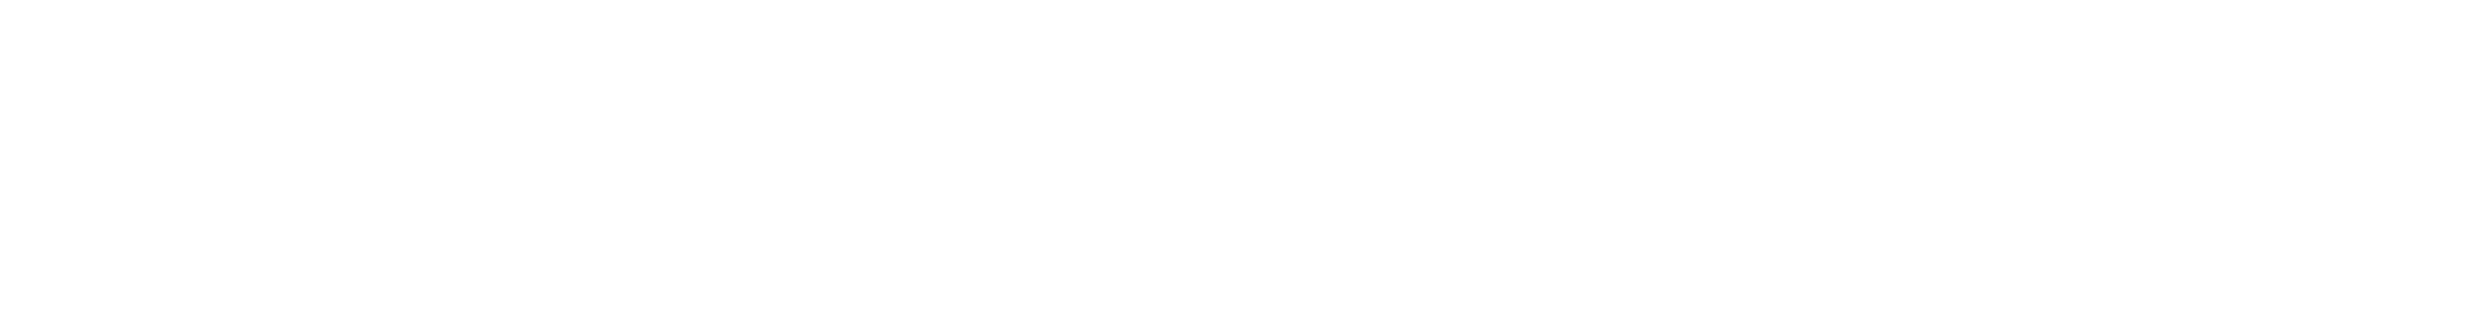 MacMedic | Mosman Newport Sydney Logo